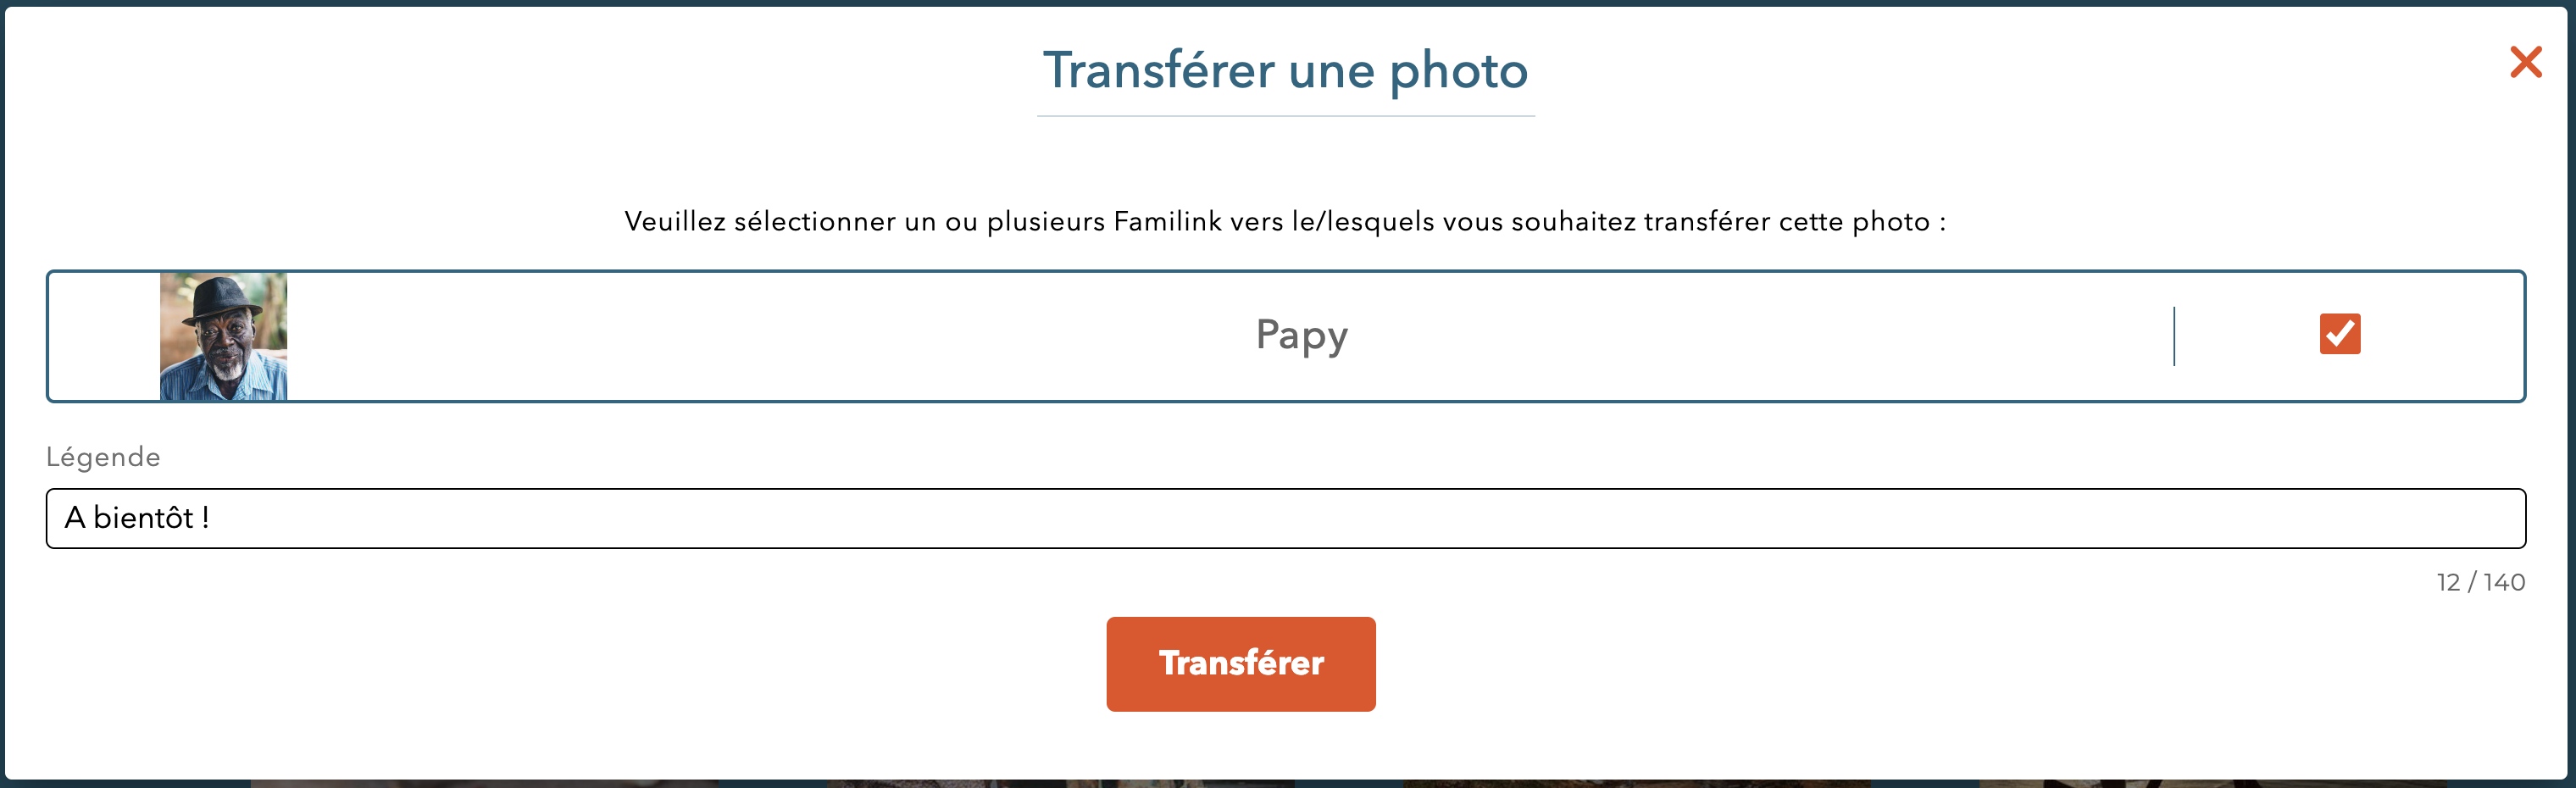 transfert_photo_fr.png